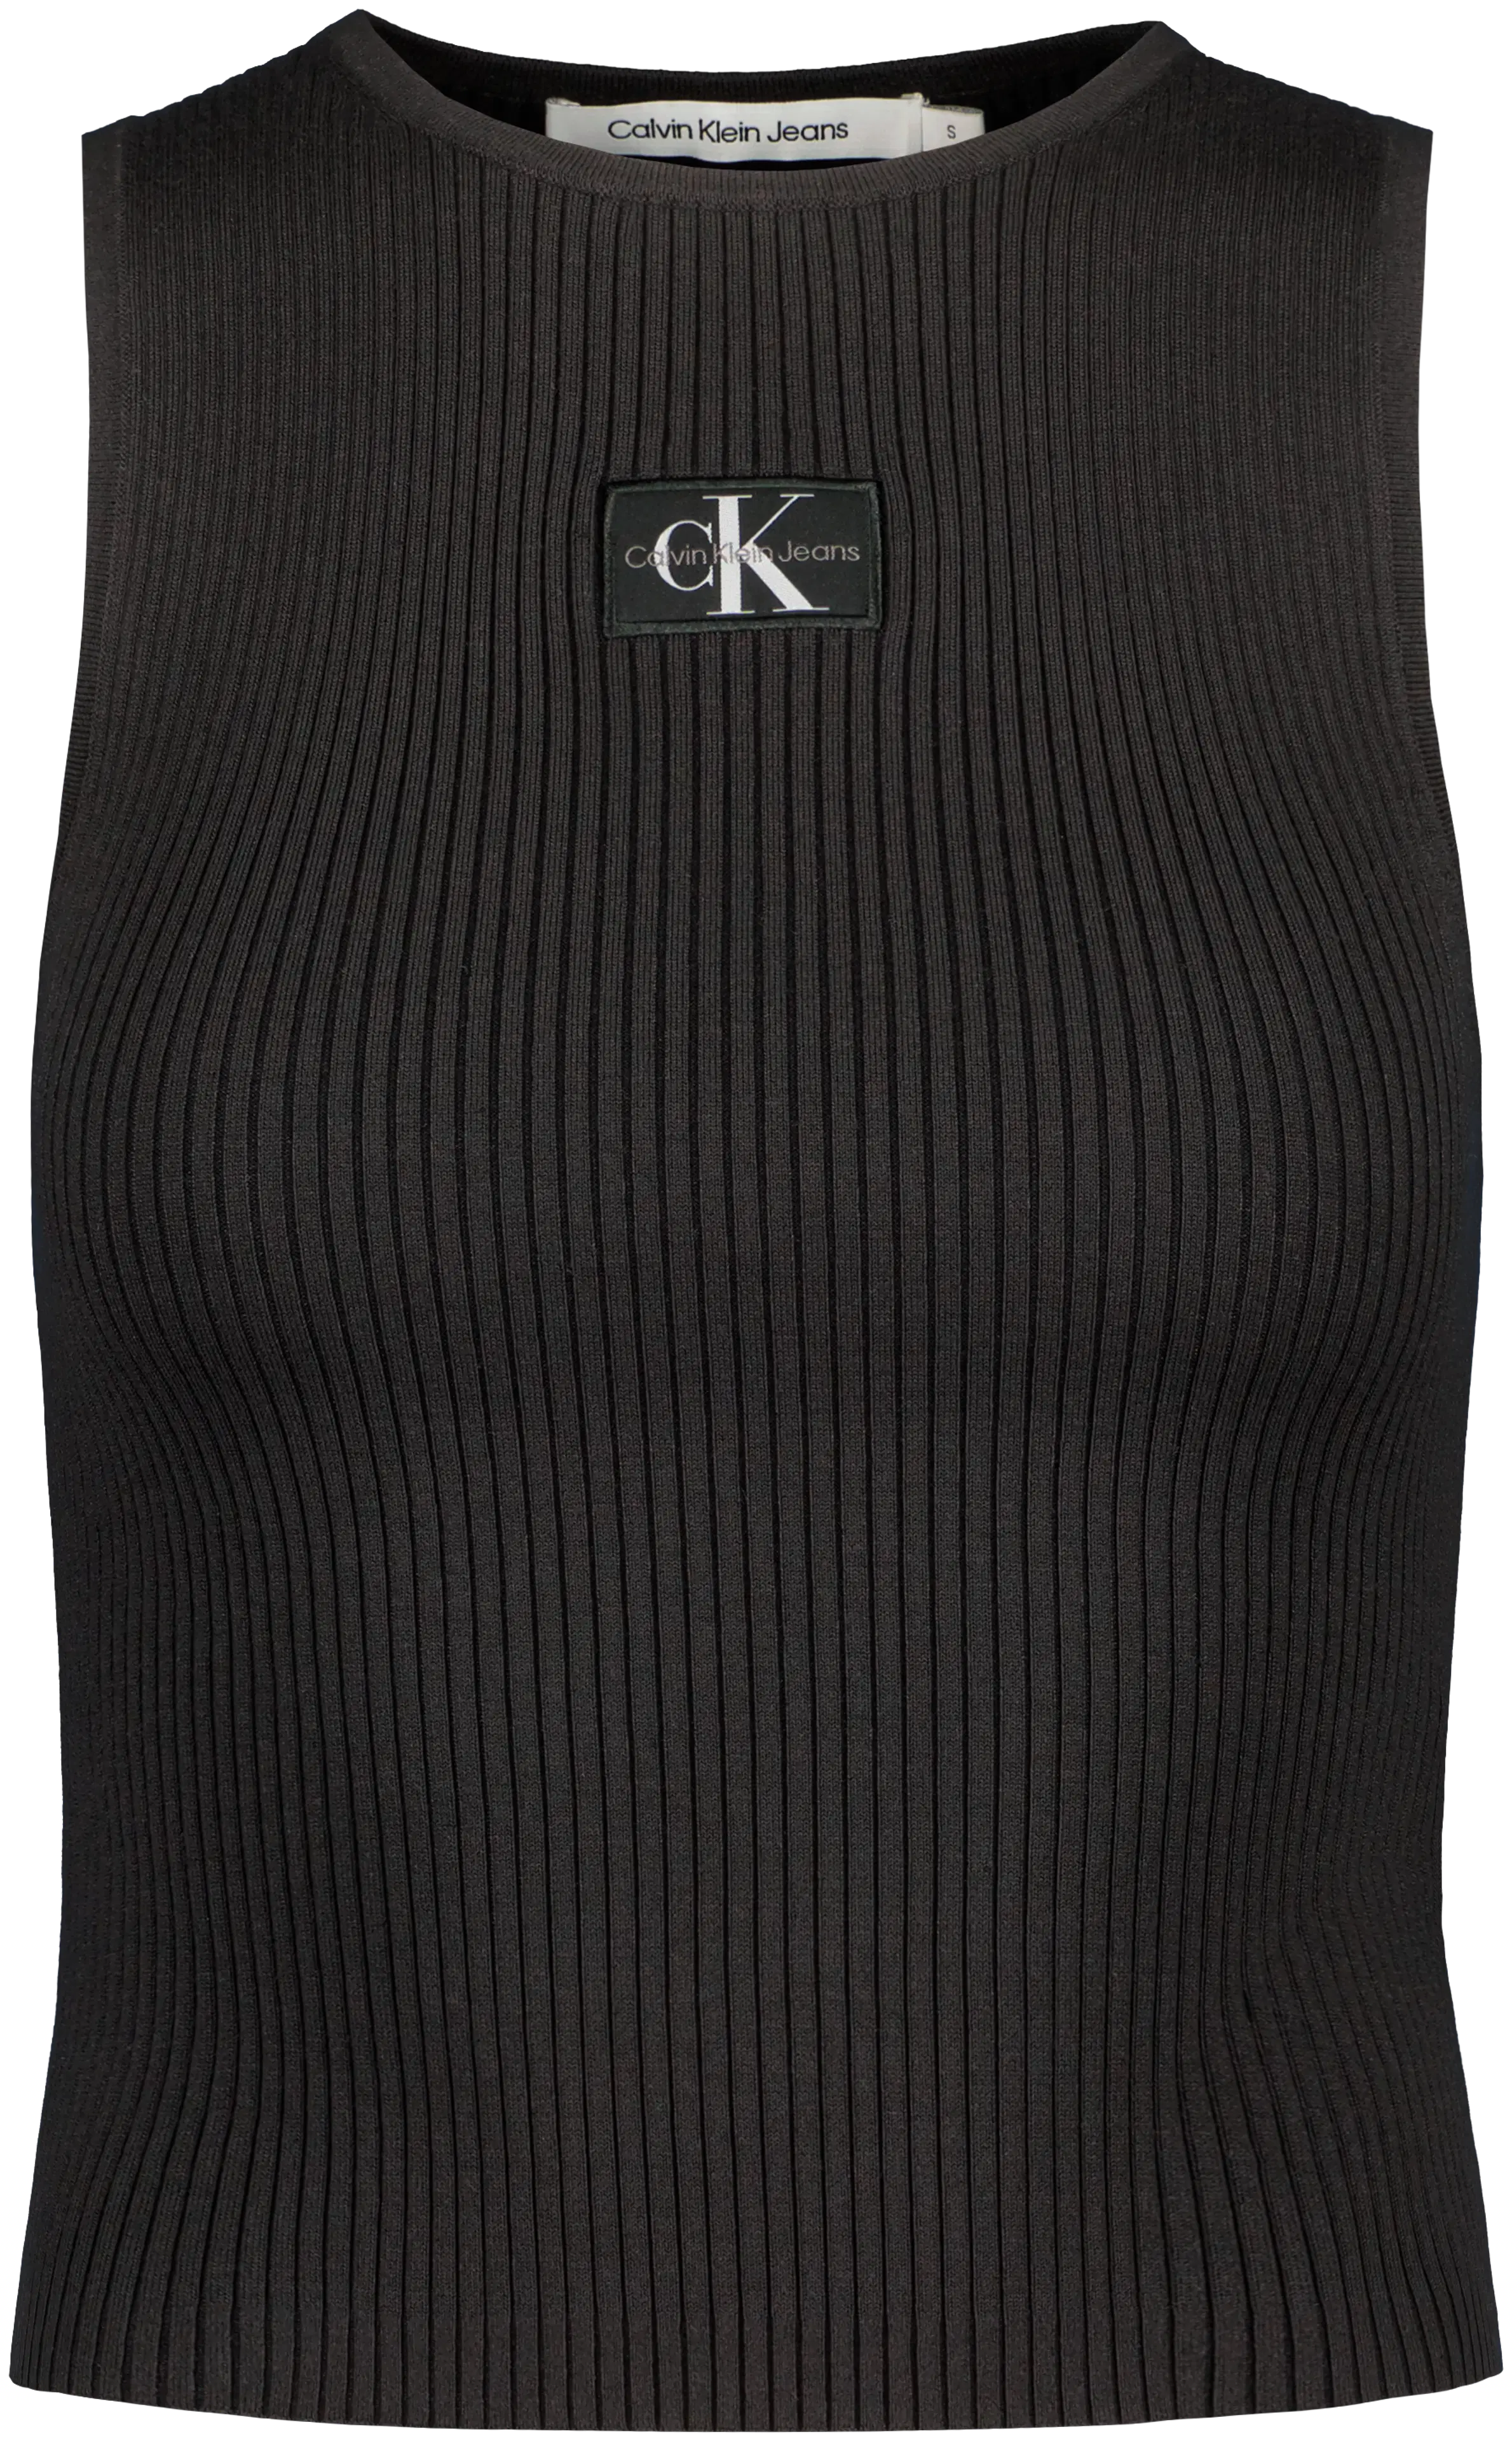 Calvin Klein Jeans Woven Label Sweater Tank Top